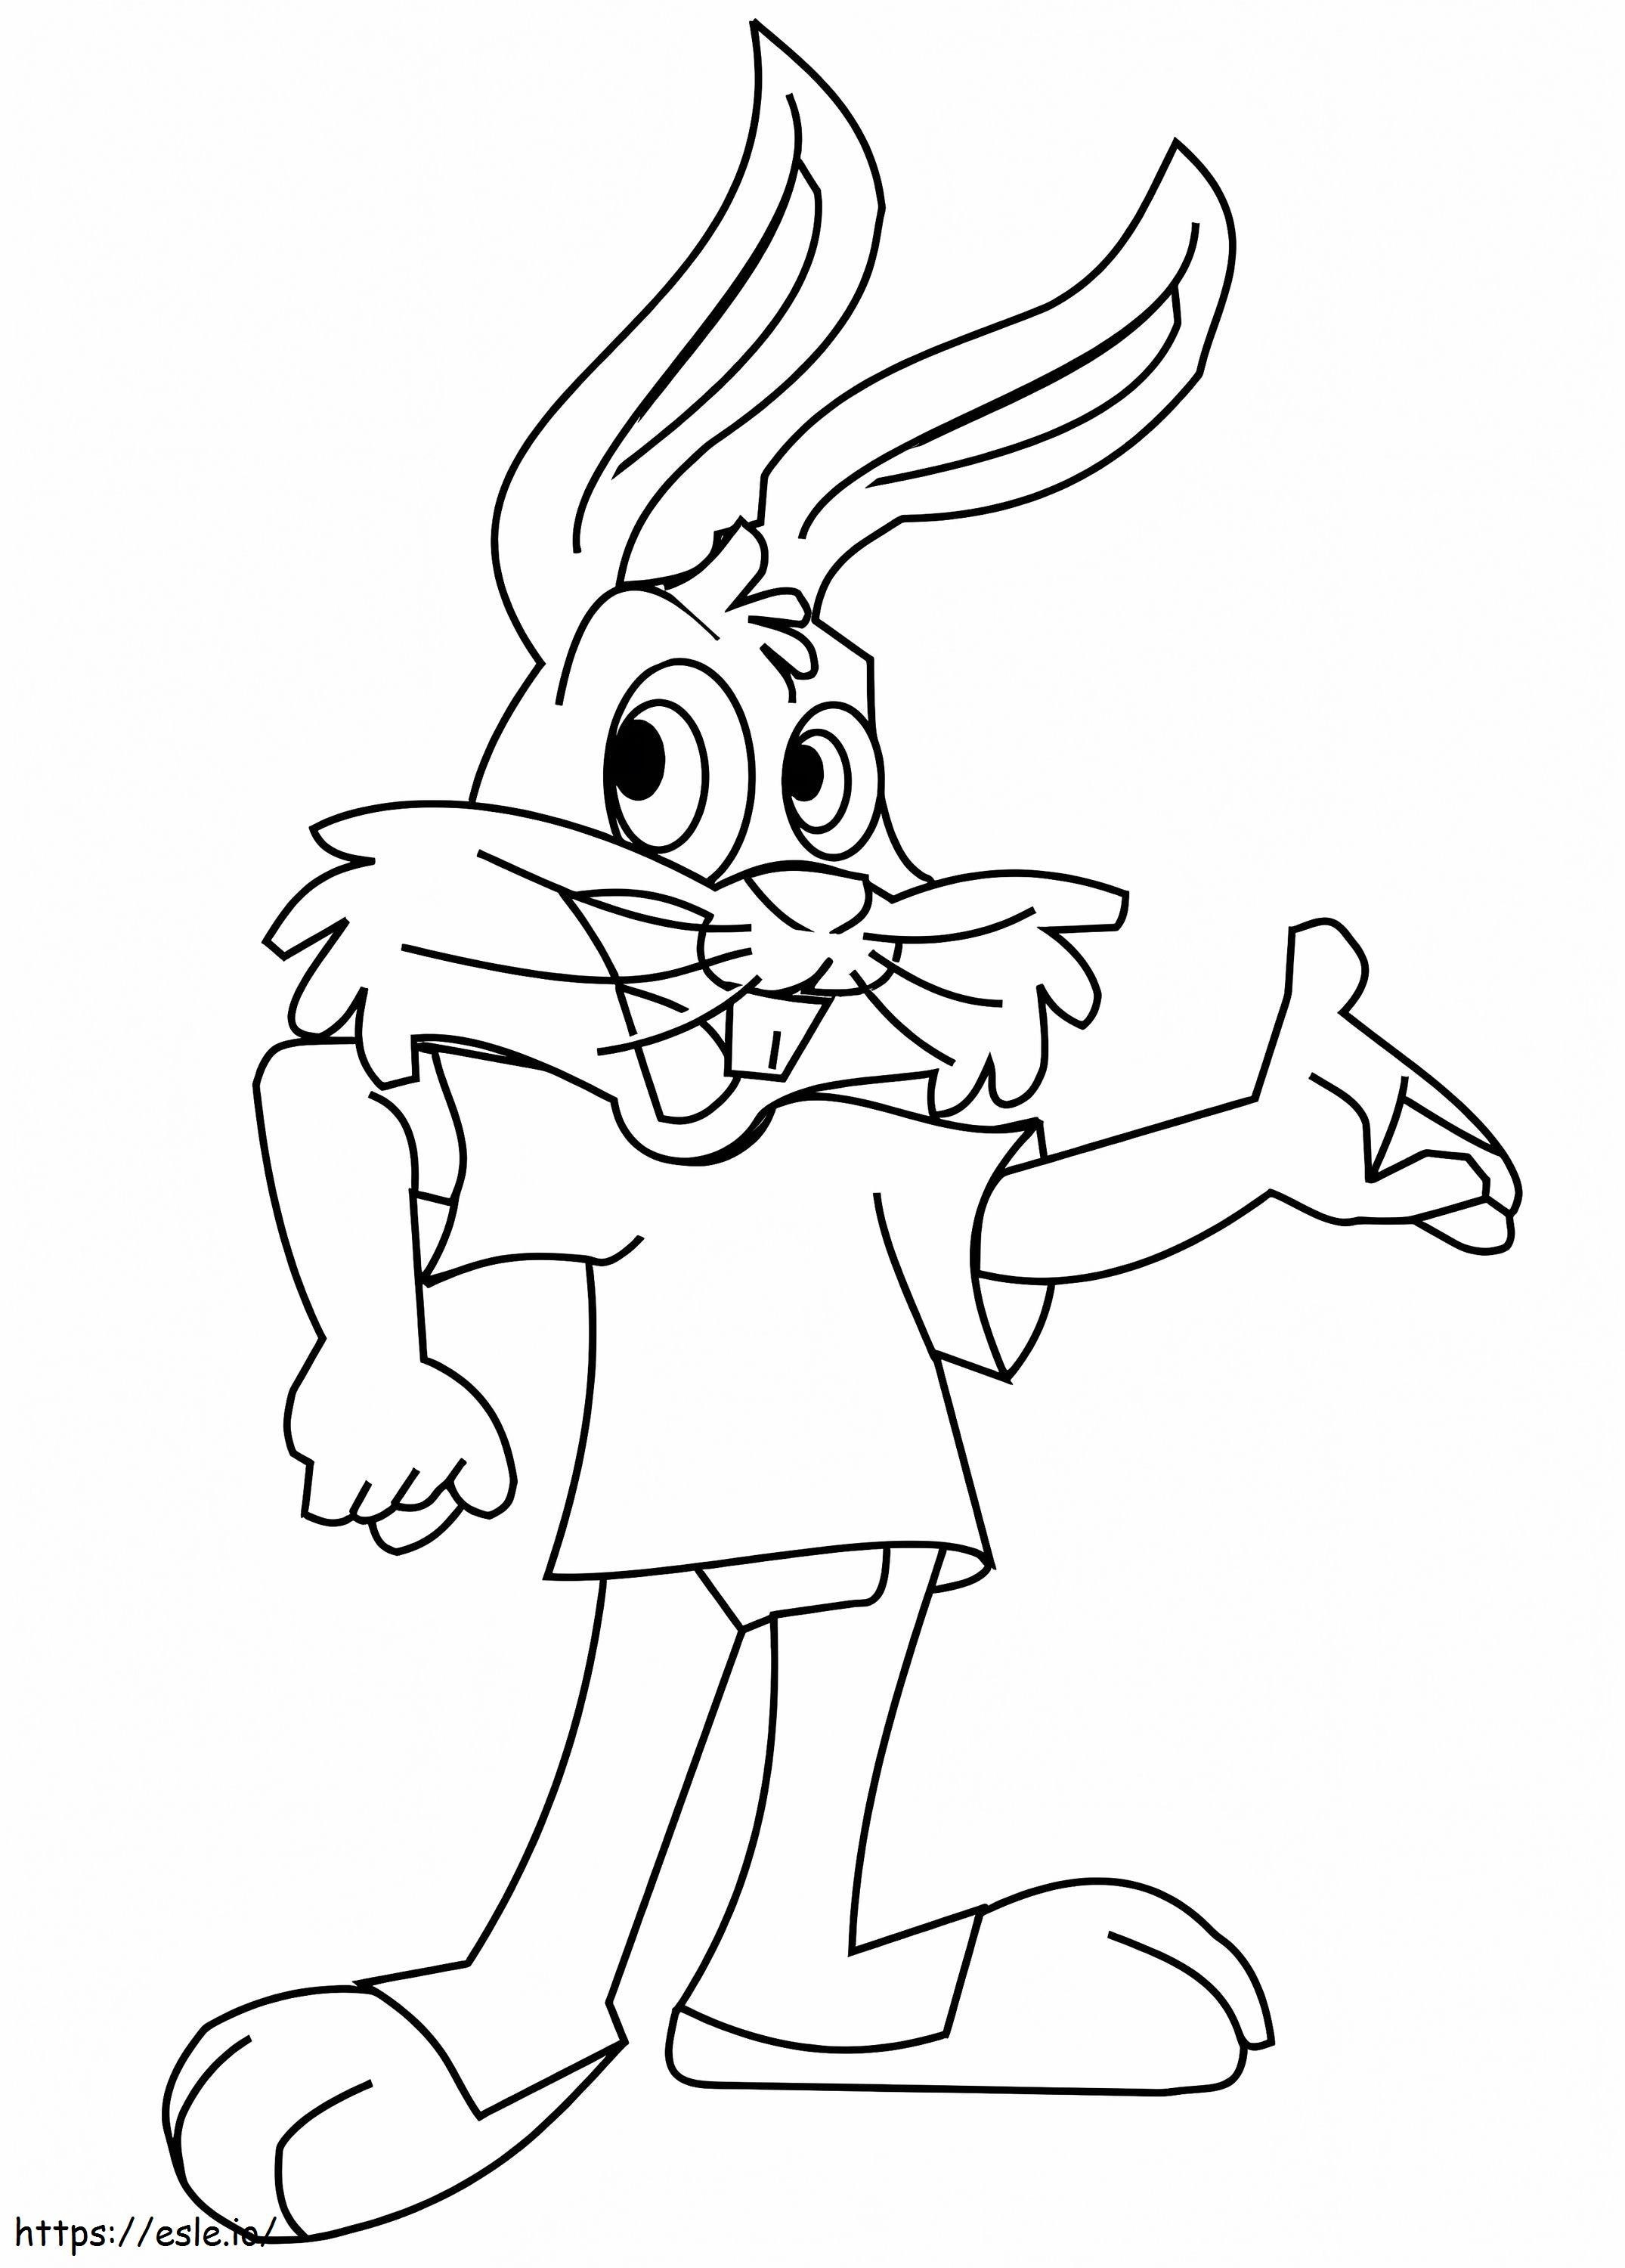 A Cartoon Rabbit coloring page